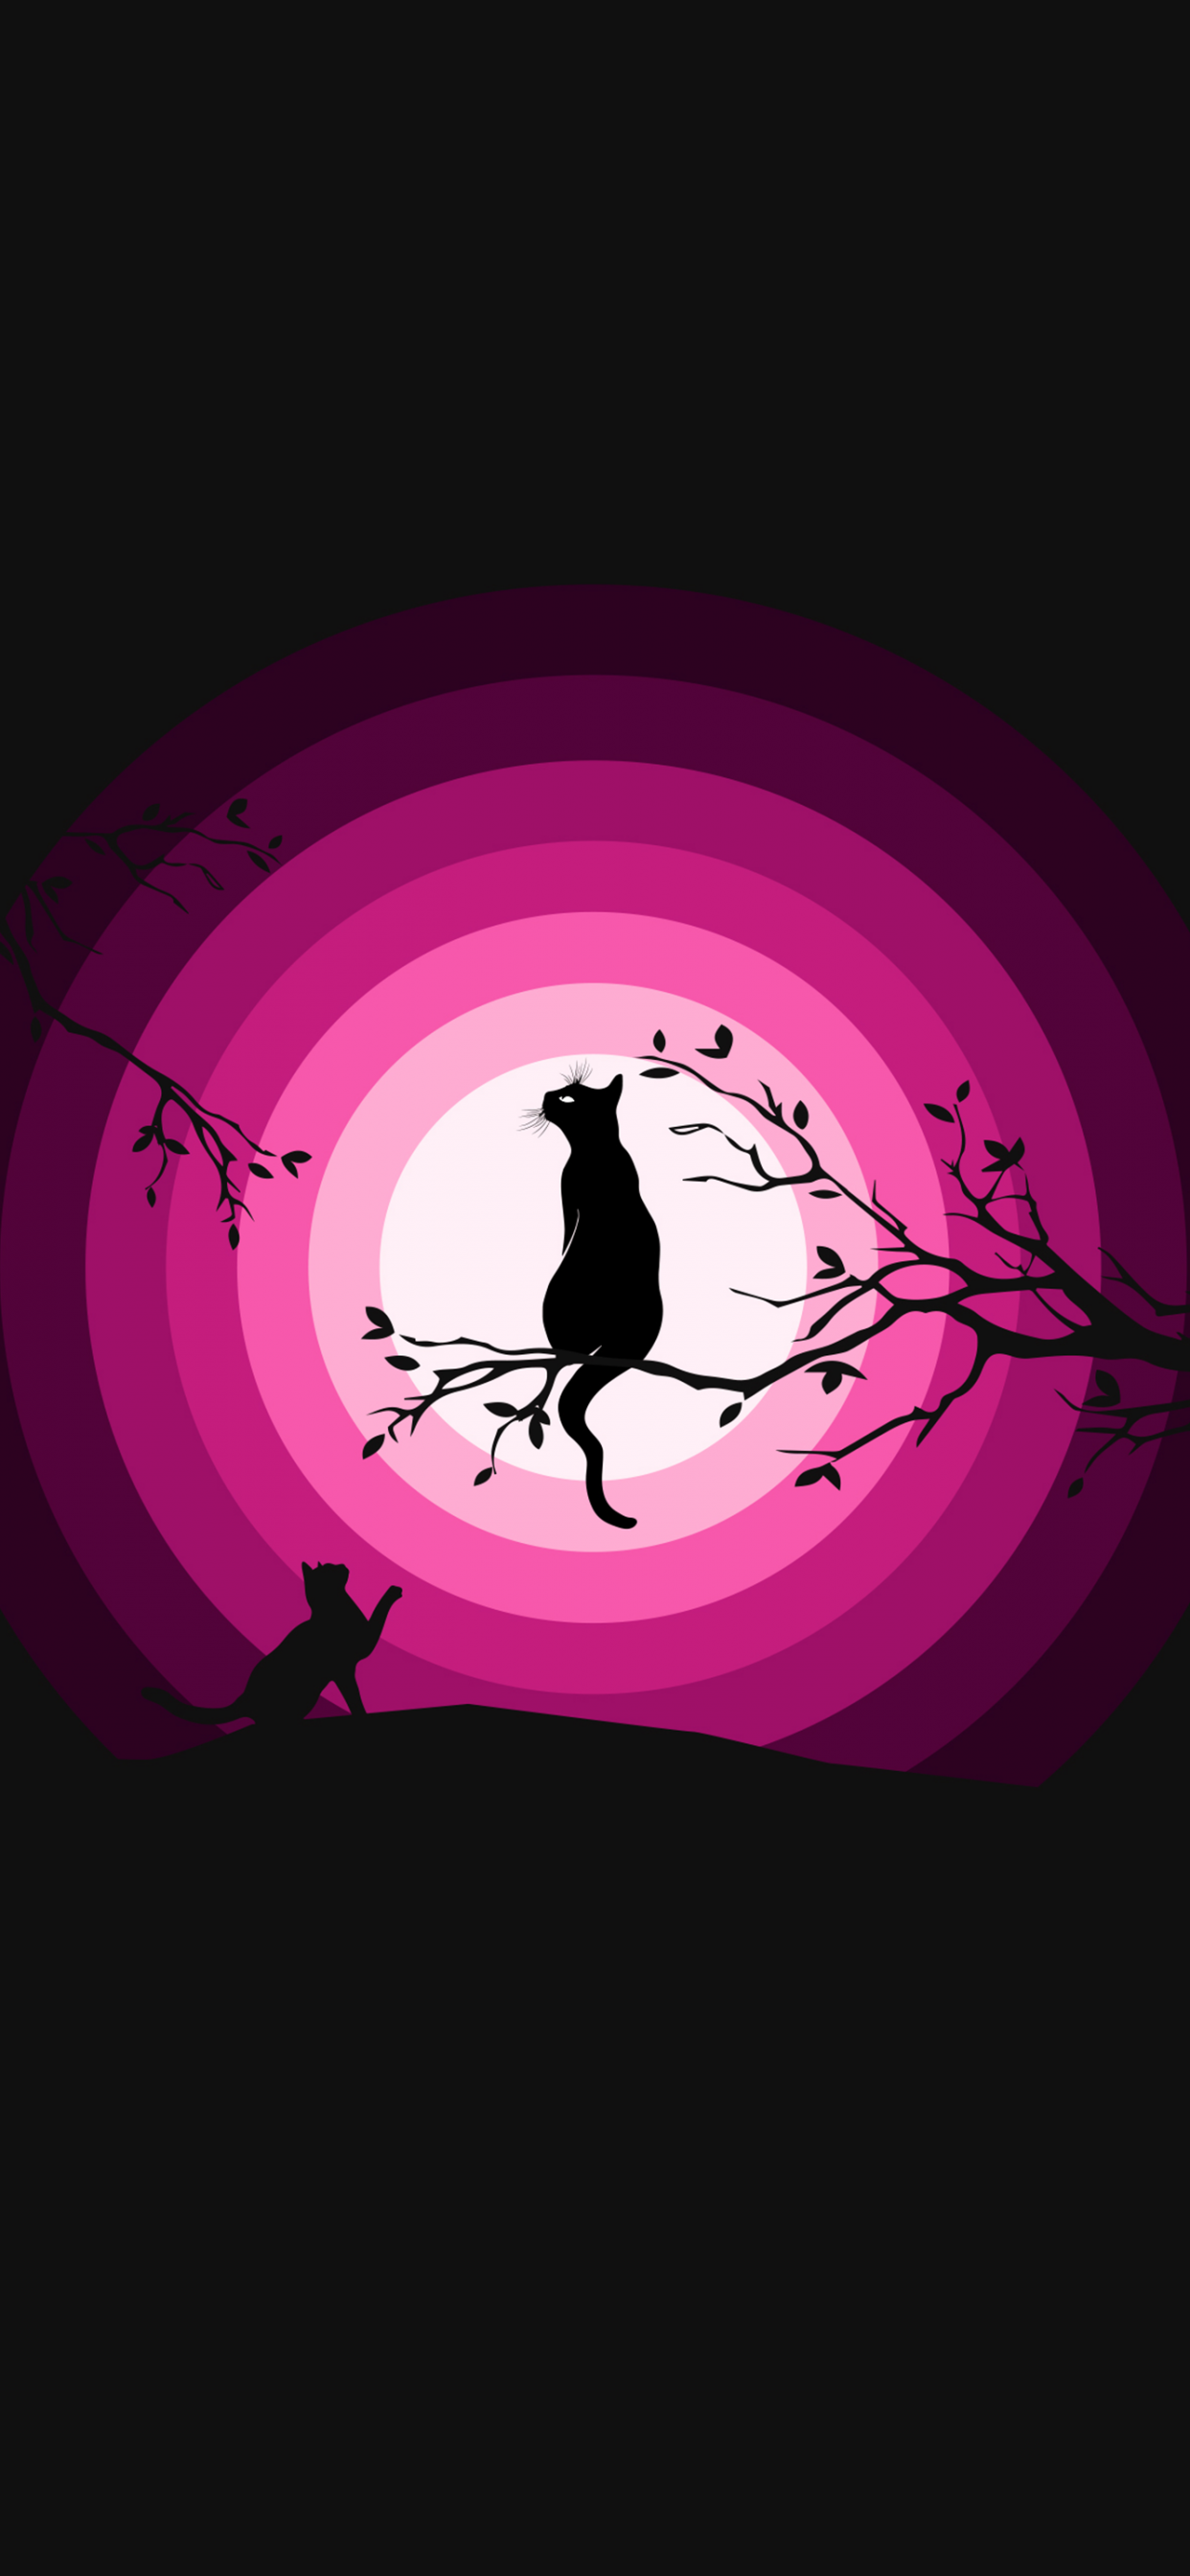 Cats 4K Wallpaper, Moon, Pink, Silhouette, Black background, Black/Dark